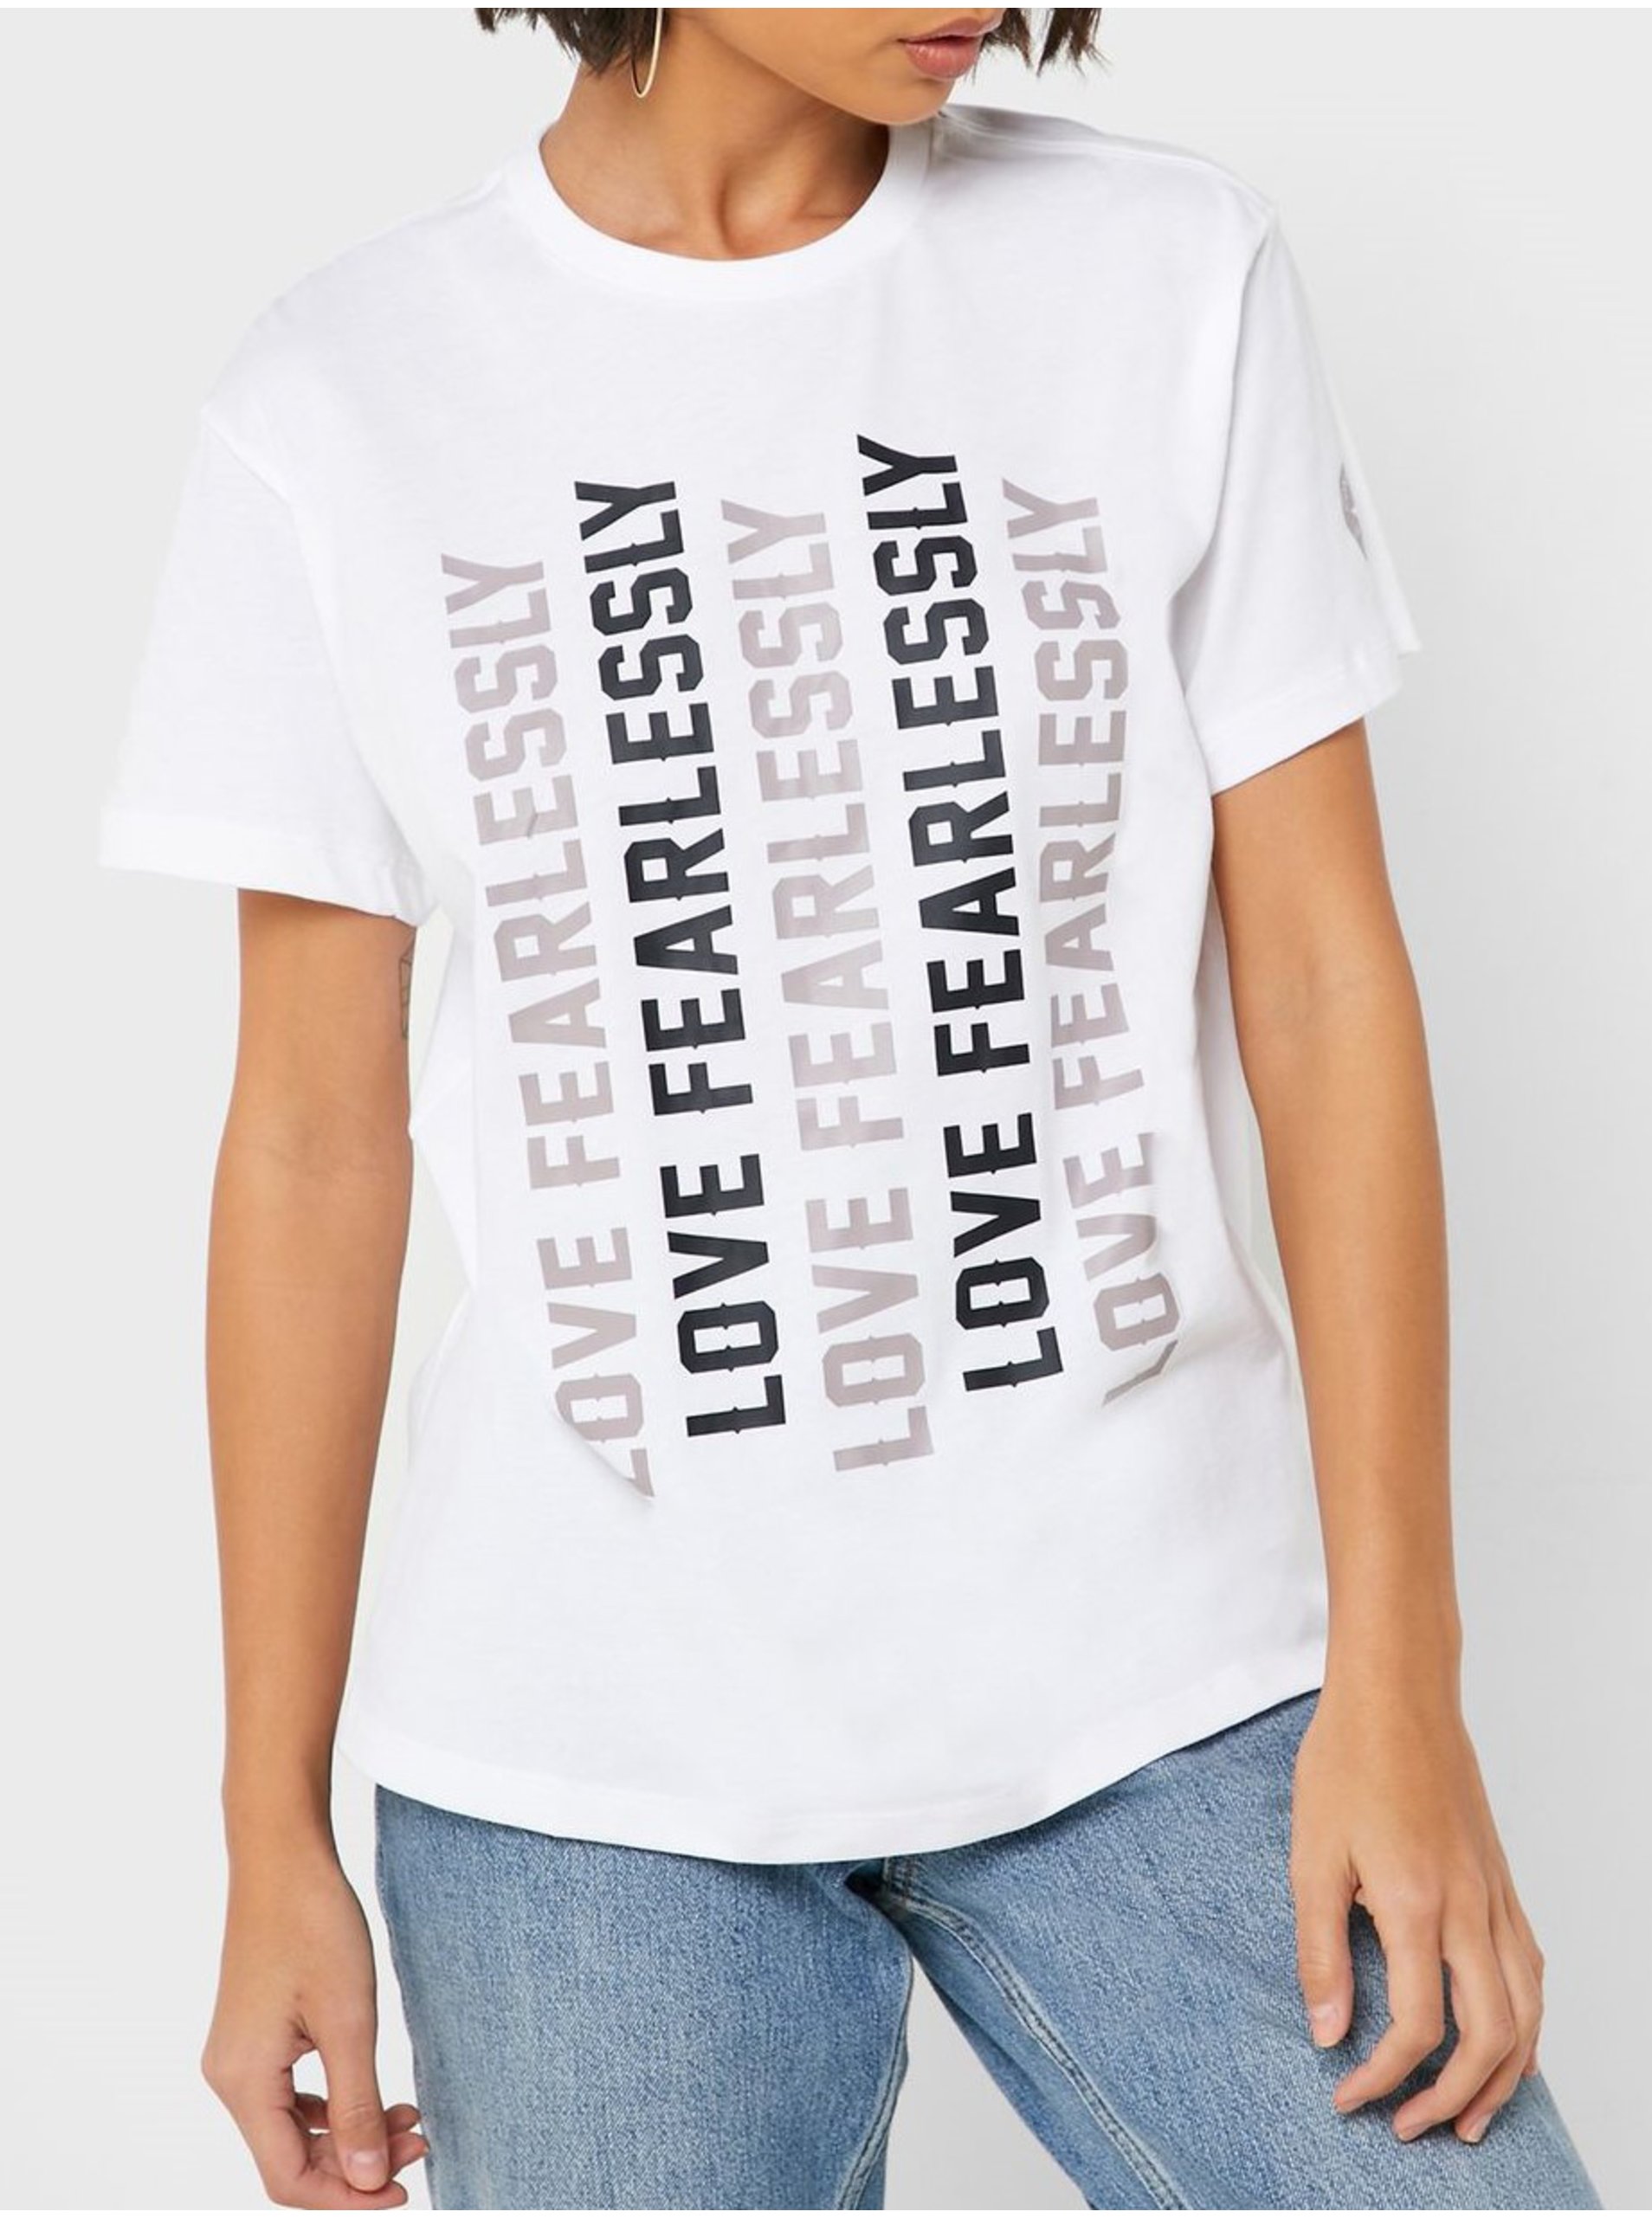 E-shop Converse biele tričko s nápismi